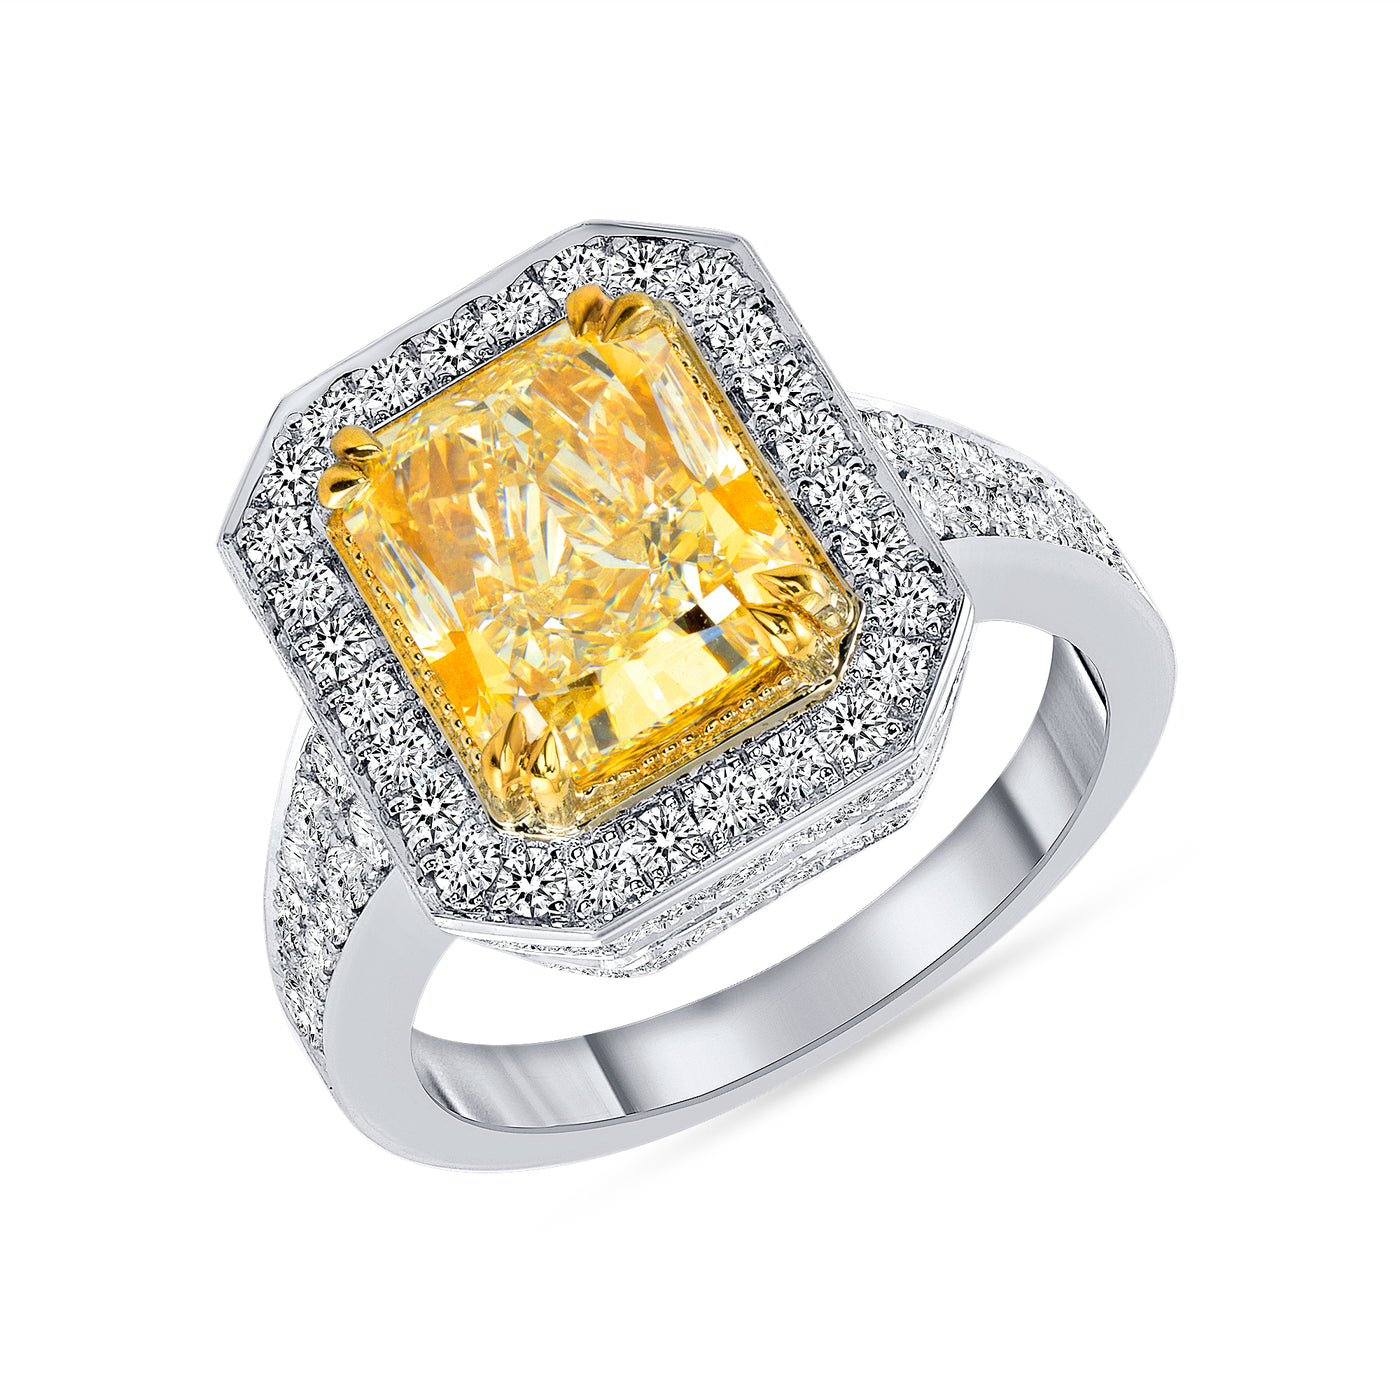 18K Gold Natural Fancy Yellow Cushion Cut Diamond Engagement Ring 2.56 Ct. Tw. (1.00 Carat Center Diamond)